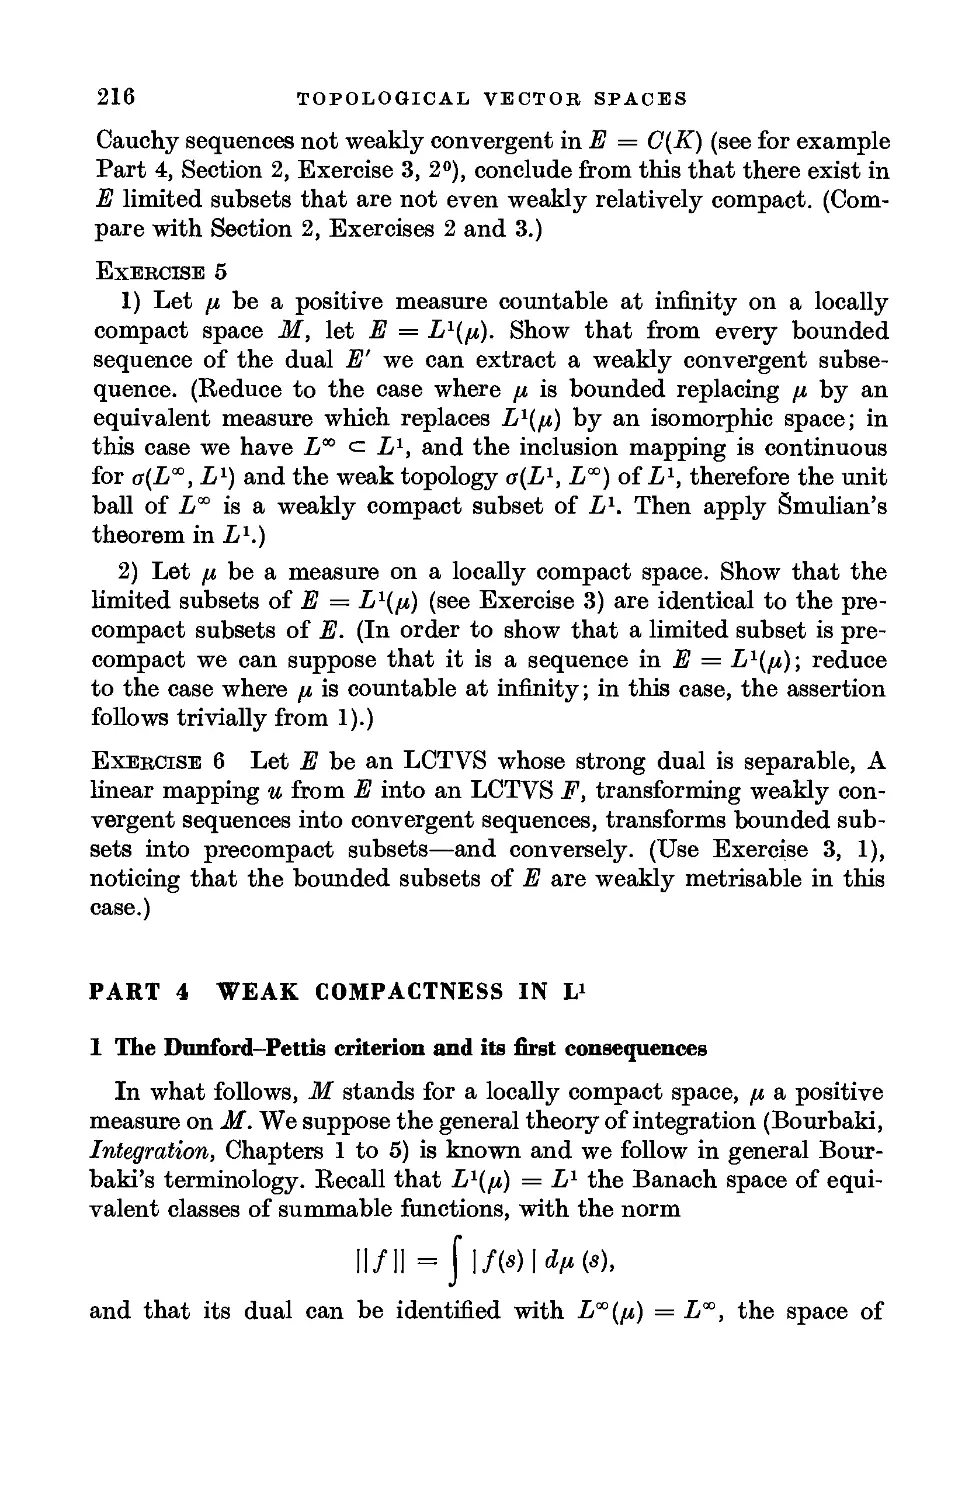 Part 4 Weak compactness in L^1